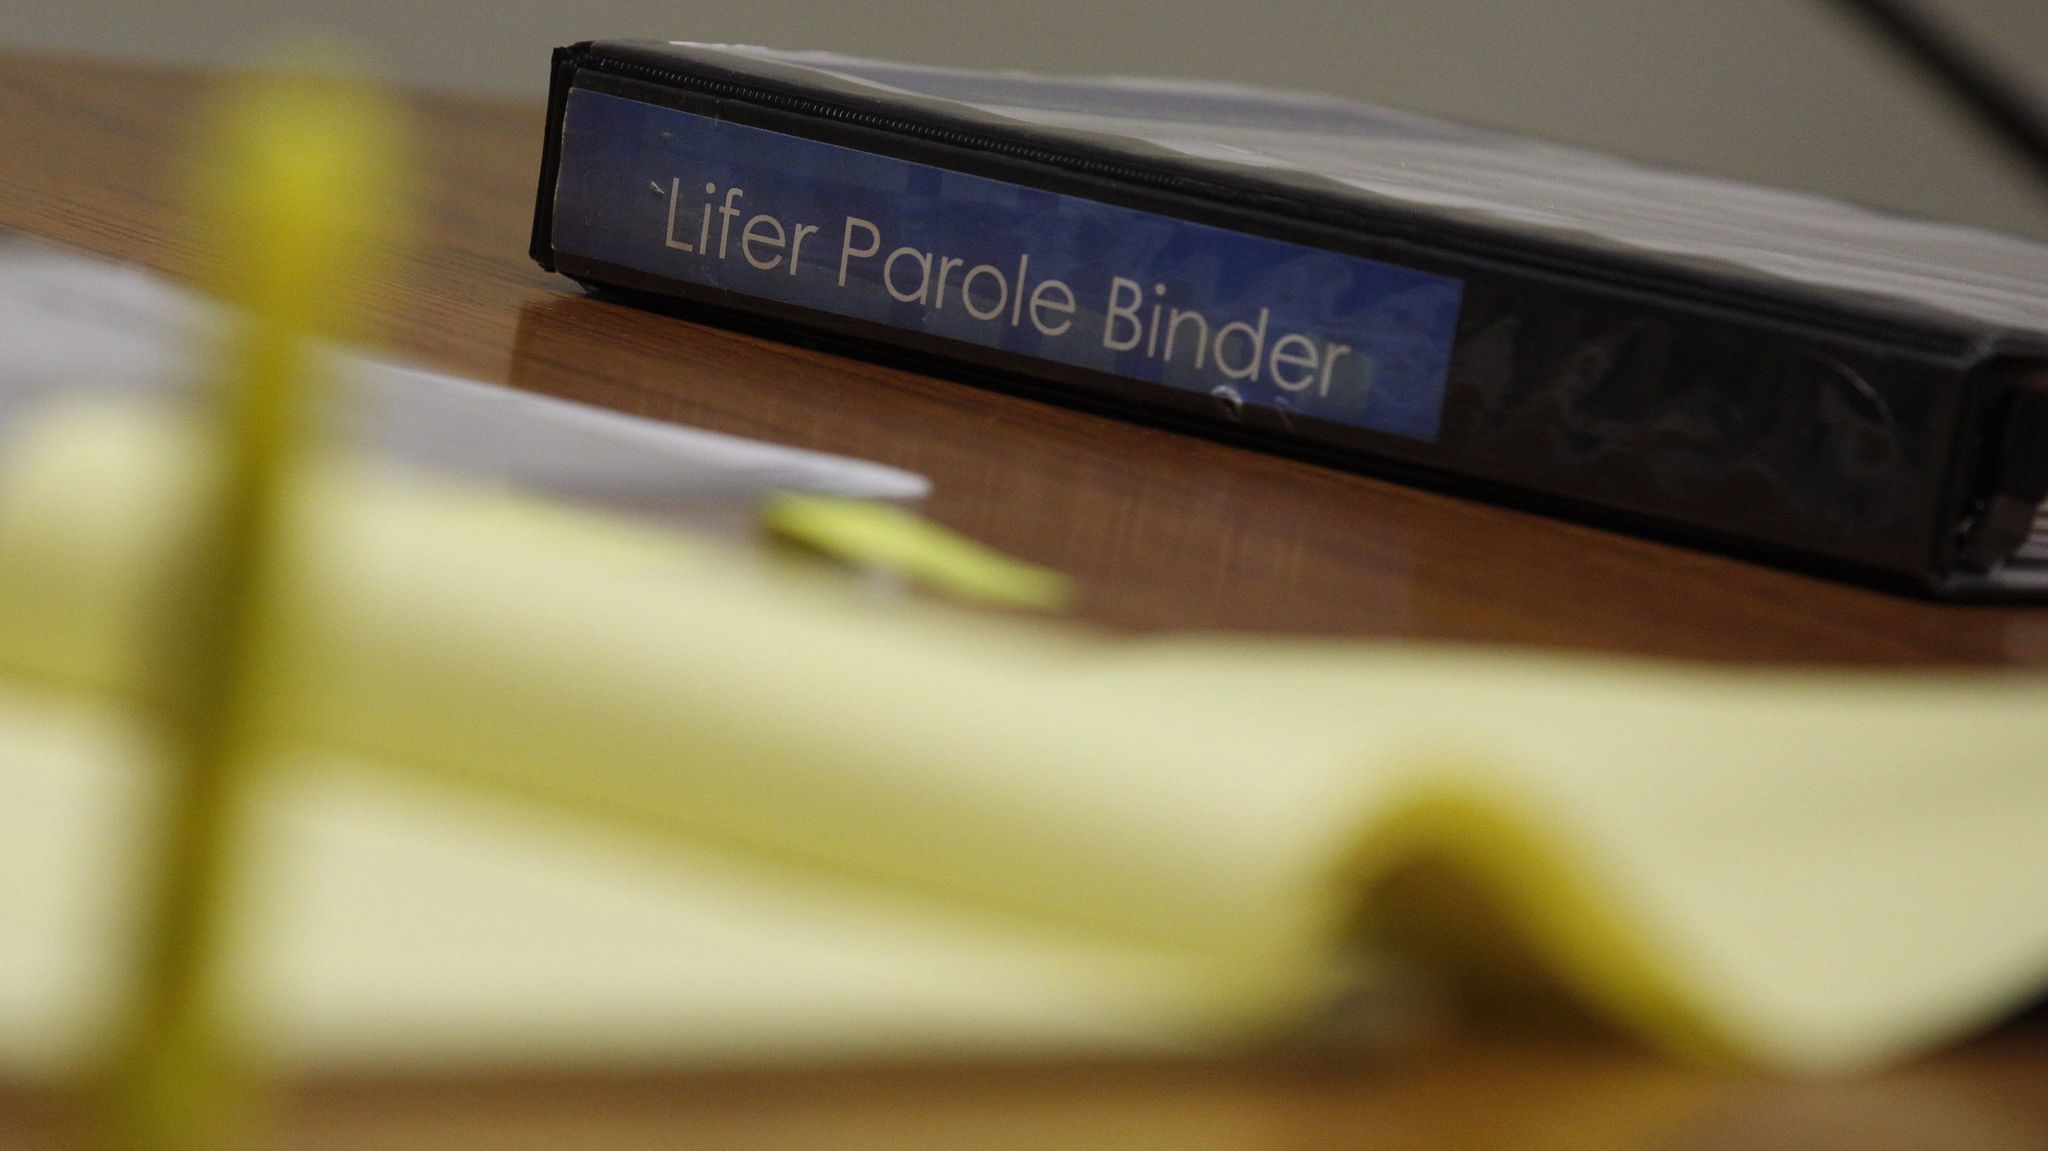 A lifer parole binder.